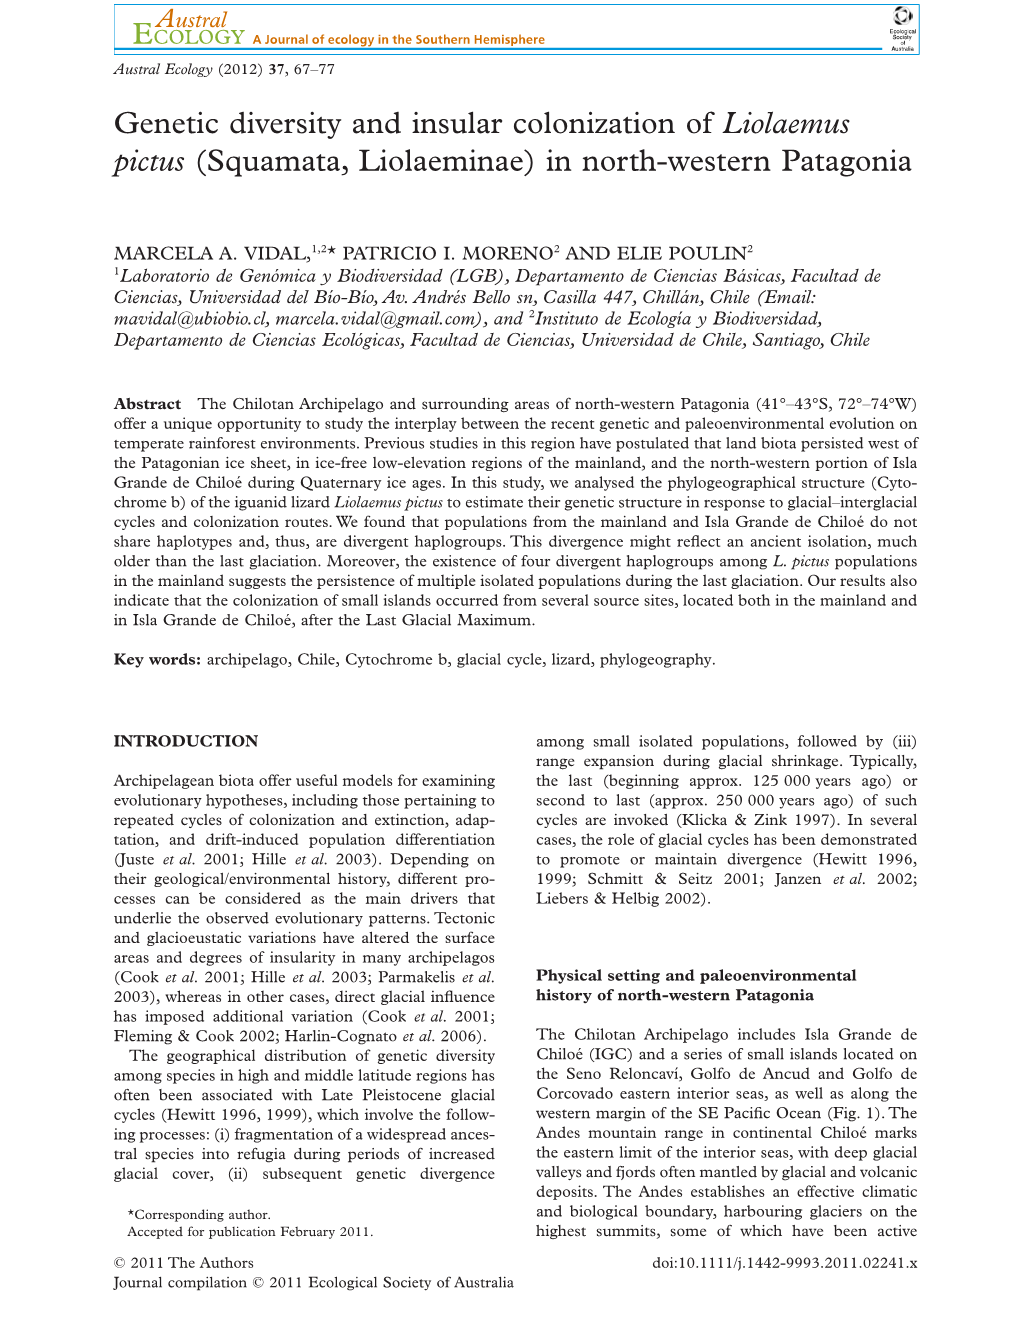 Genetic Diversity and Insular Colonization of Liolaemus Pictus